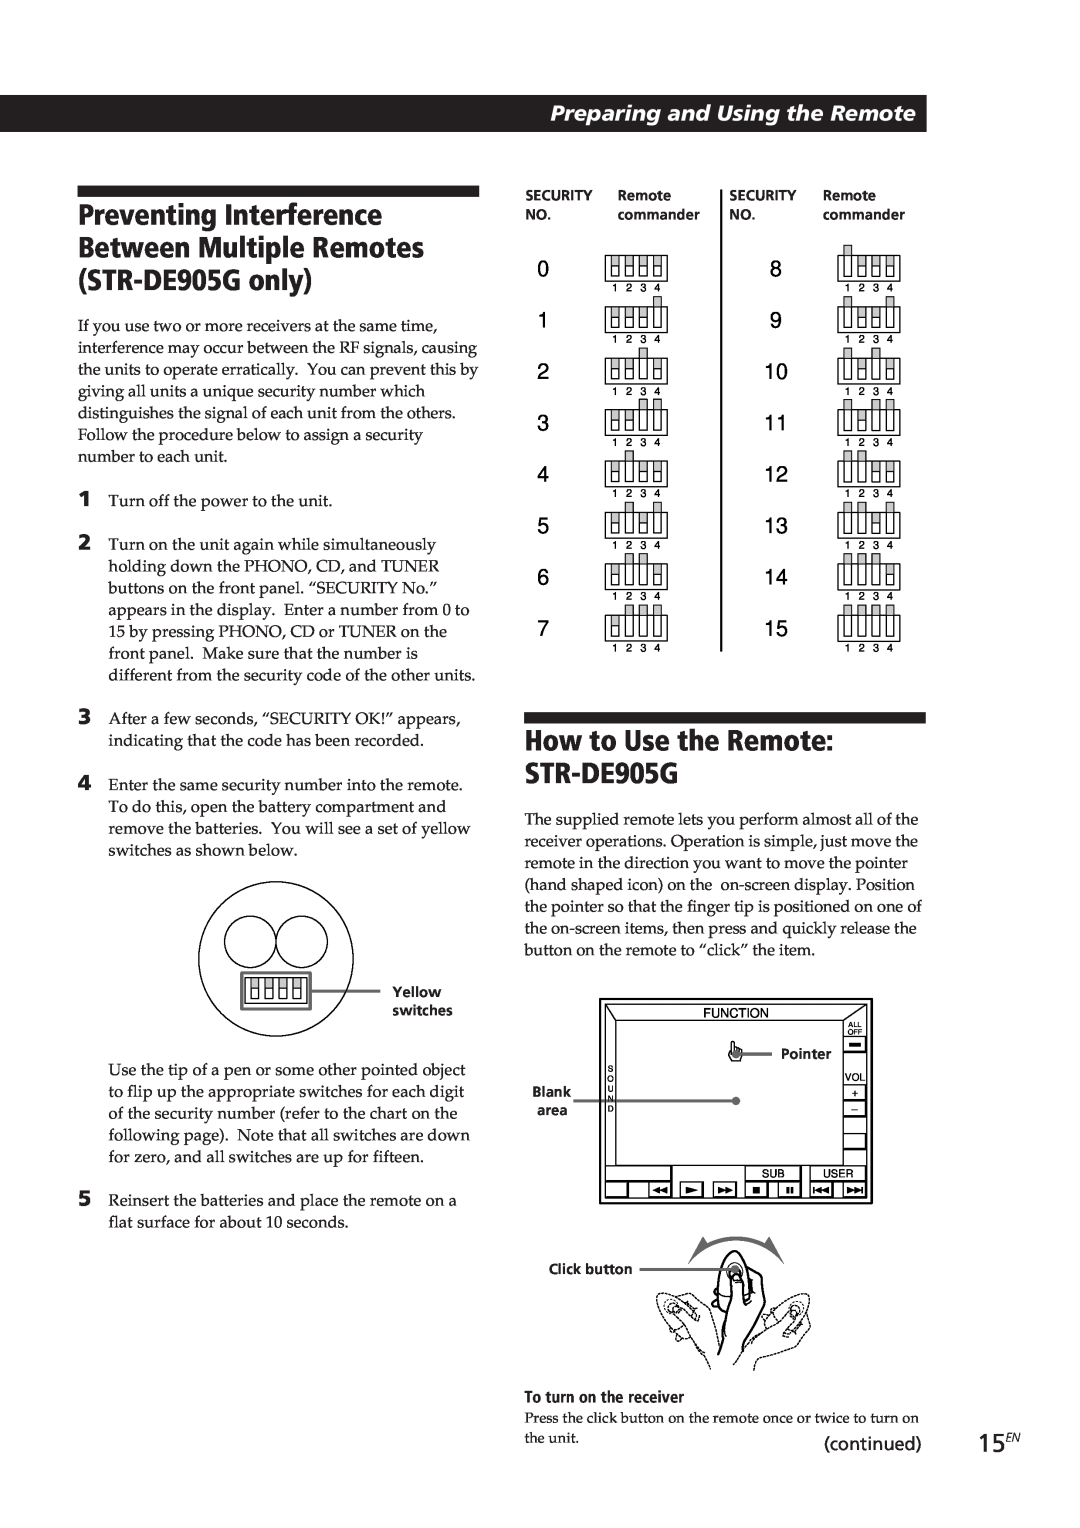 Sony STR-DE905G, STR-DE805G manual How to Use the Remote: STR-DE905G, Preparing and Using the Remote, continued 